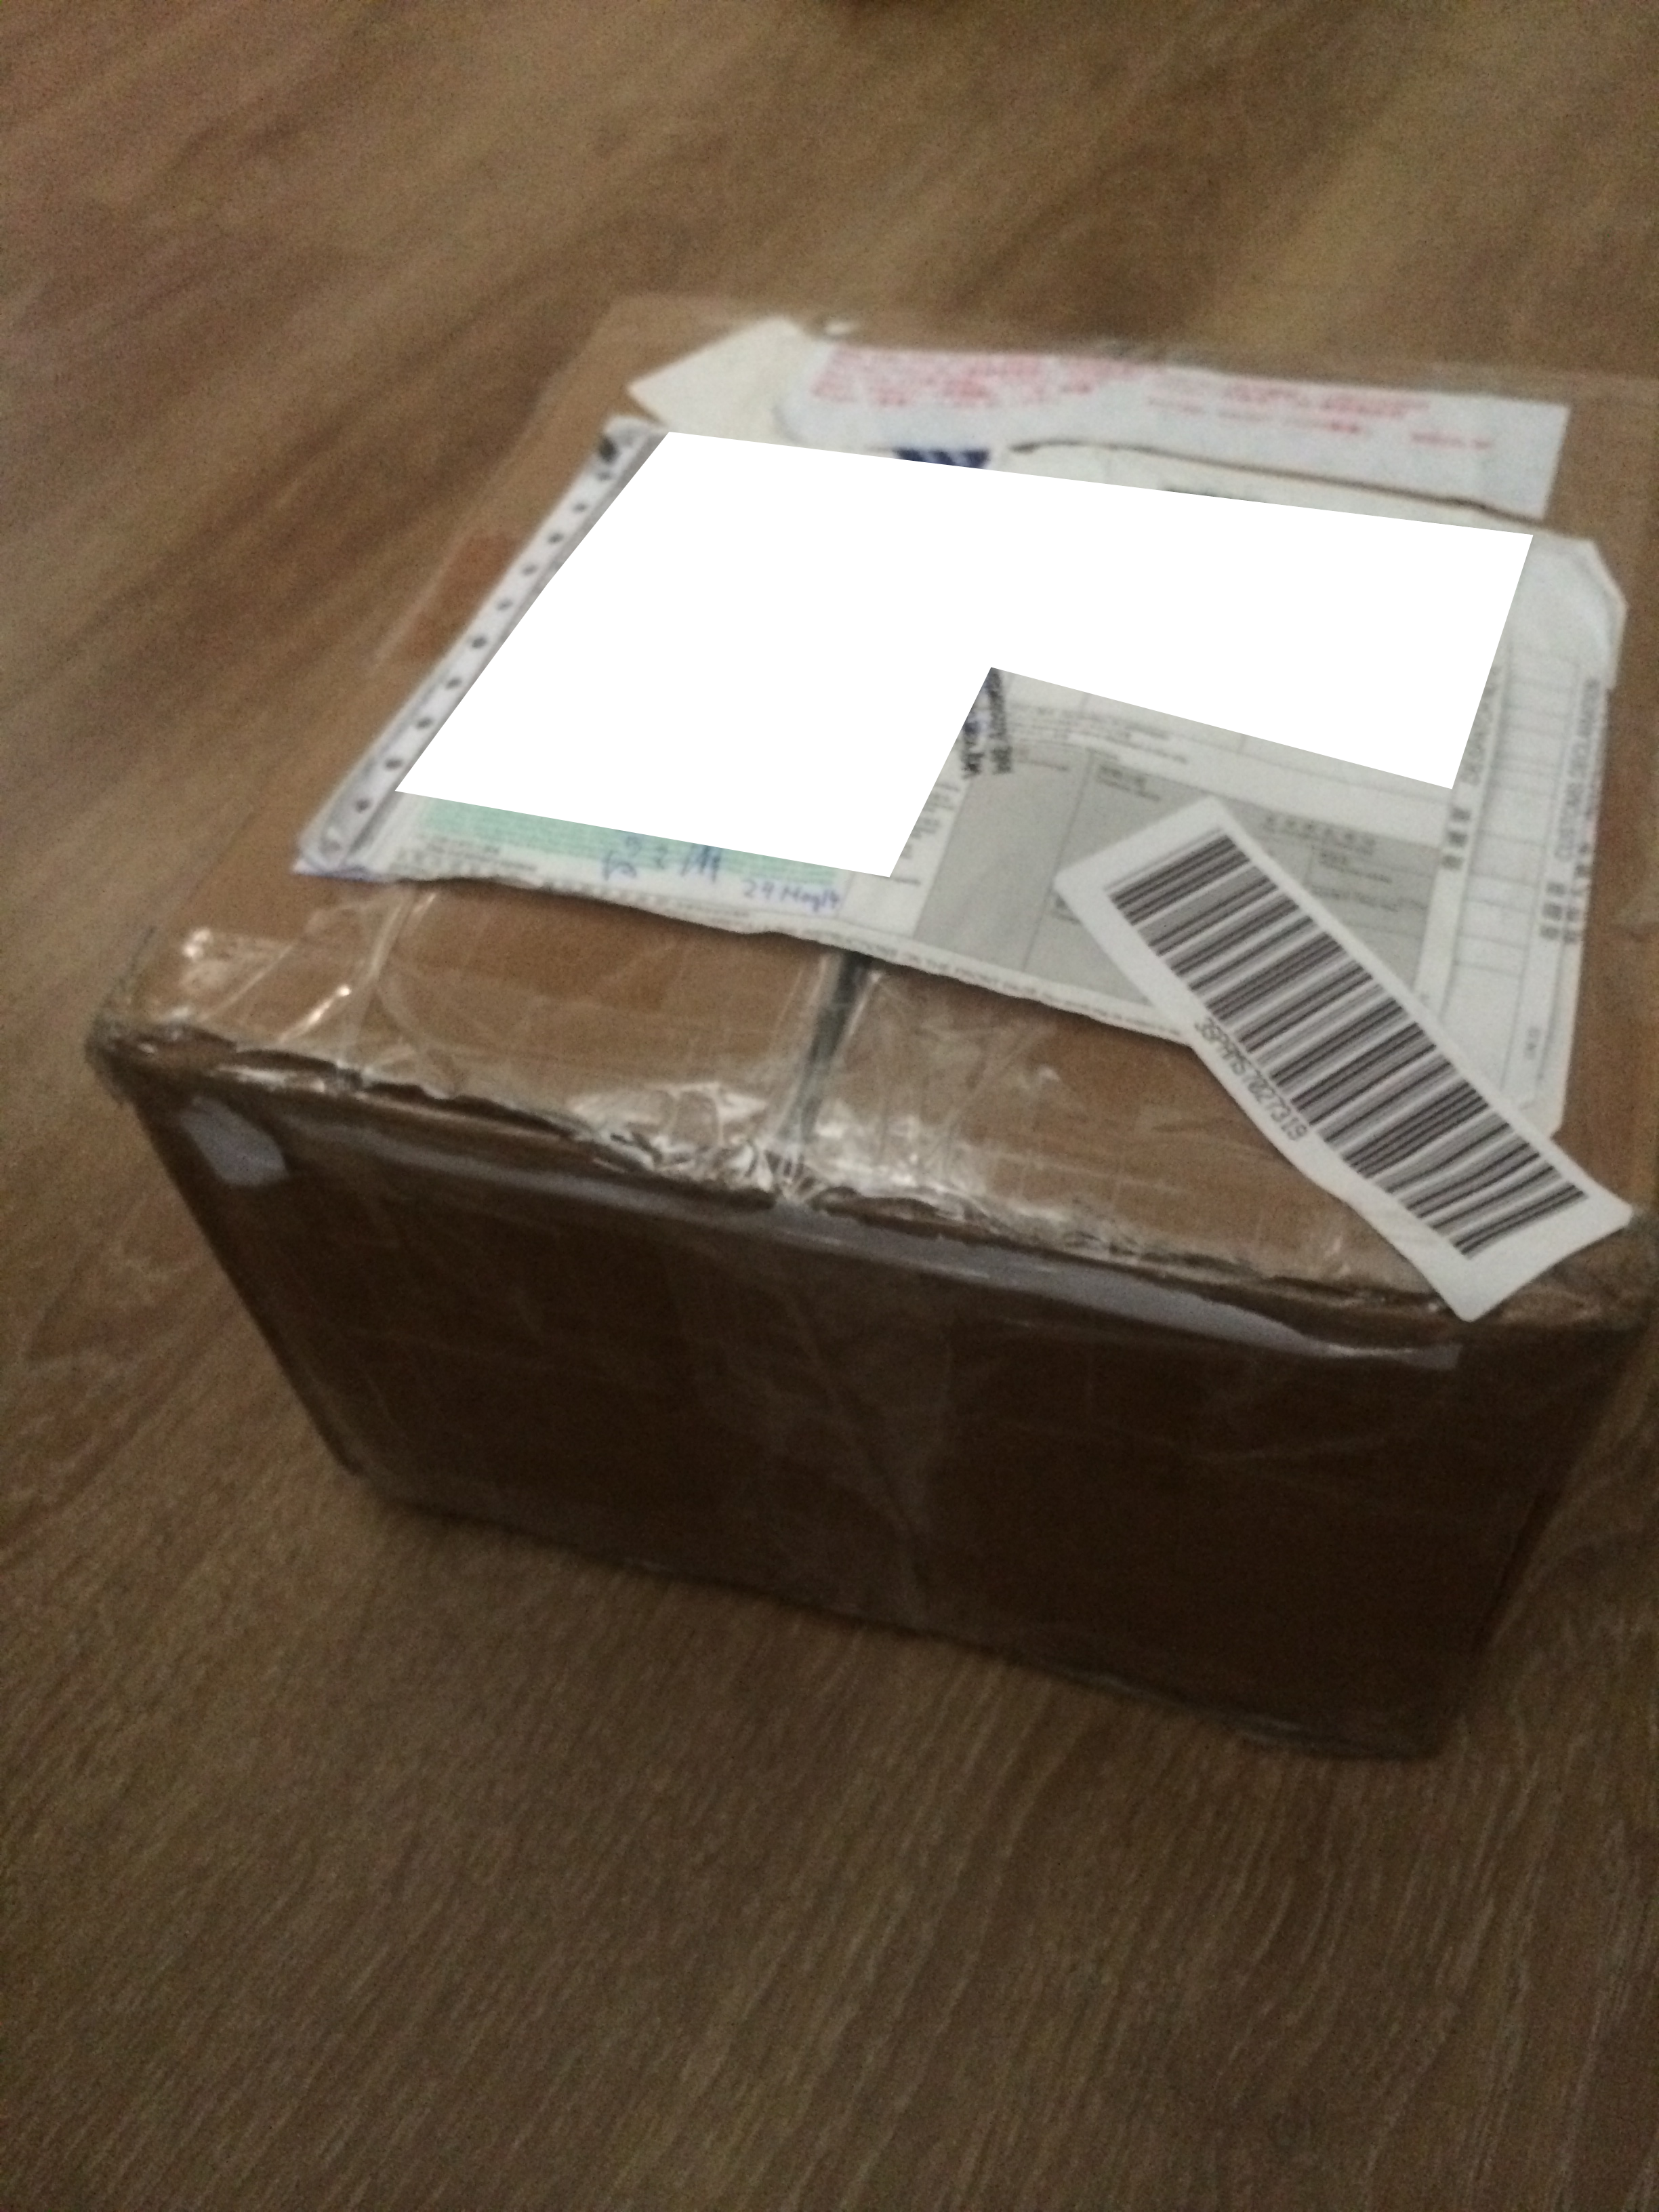 The Surprise Box returned